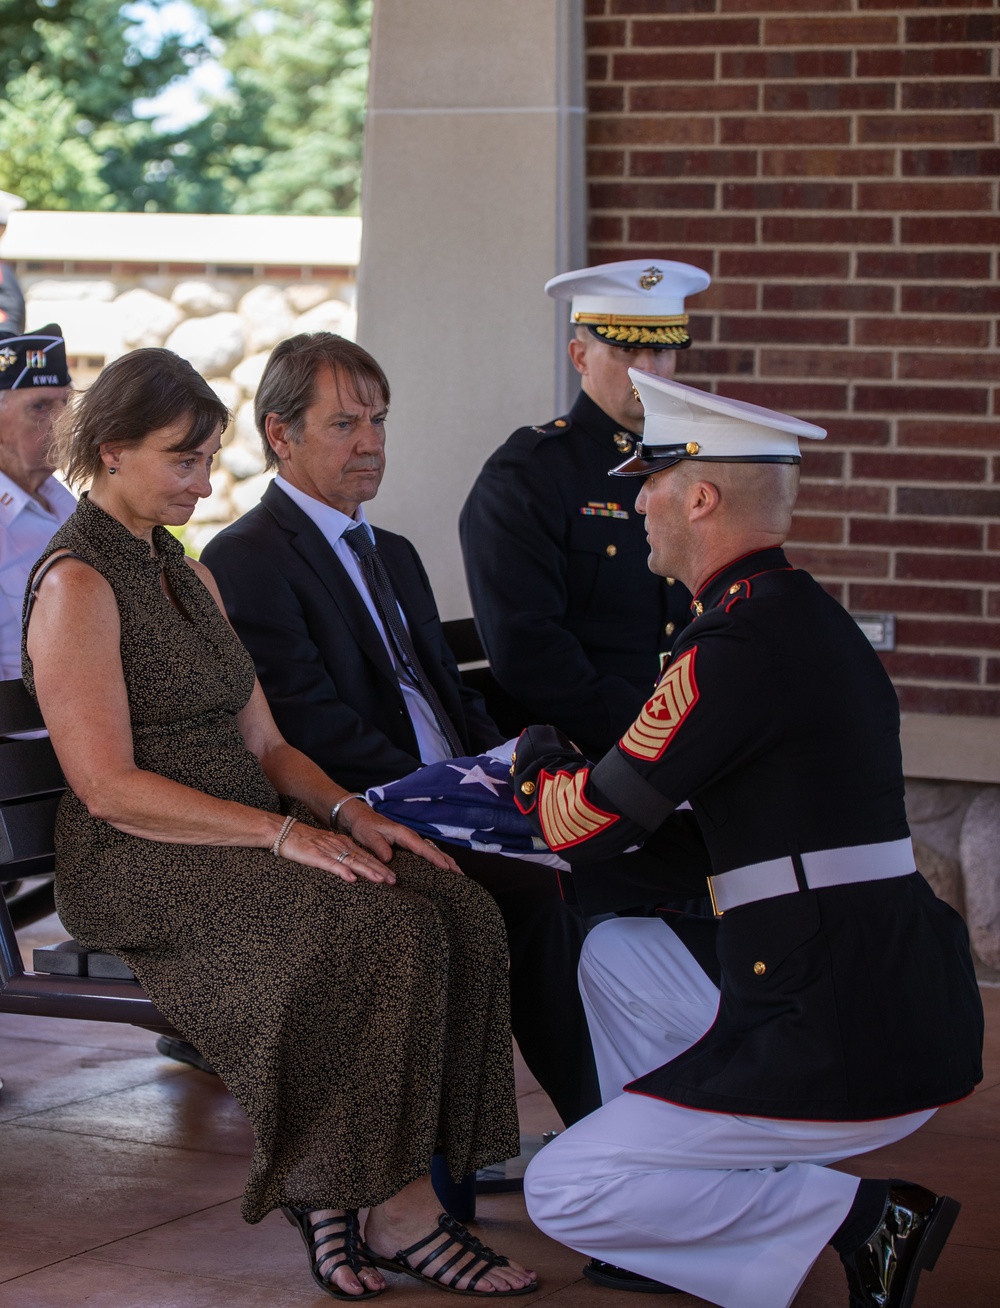 Medal of Honor Recipient Pfc. Robert E. Simanek Laid to Rest